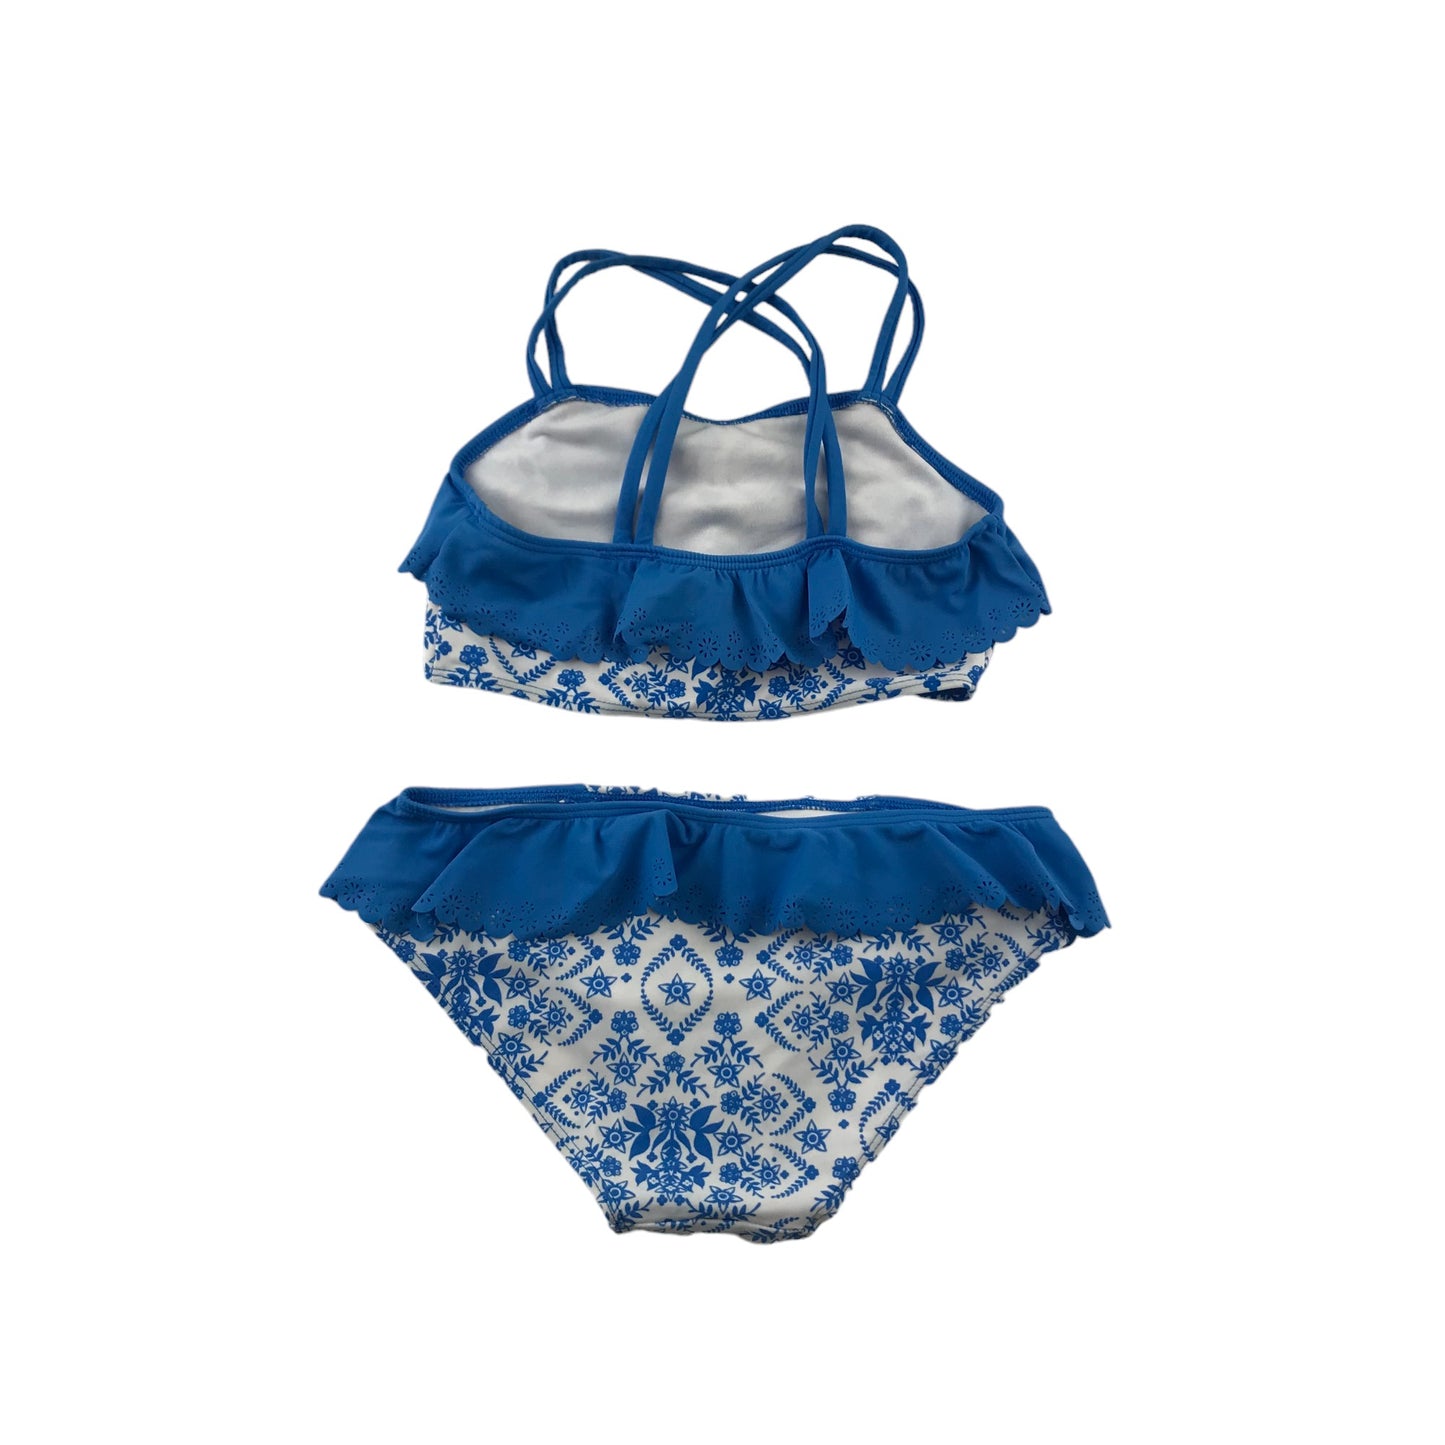 Tu Bikini Age 8 Blue and White Floral Frill Detail 2-piece Set